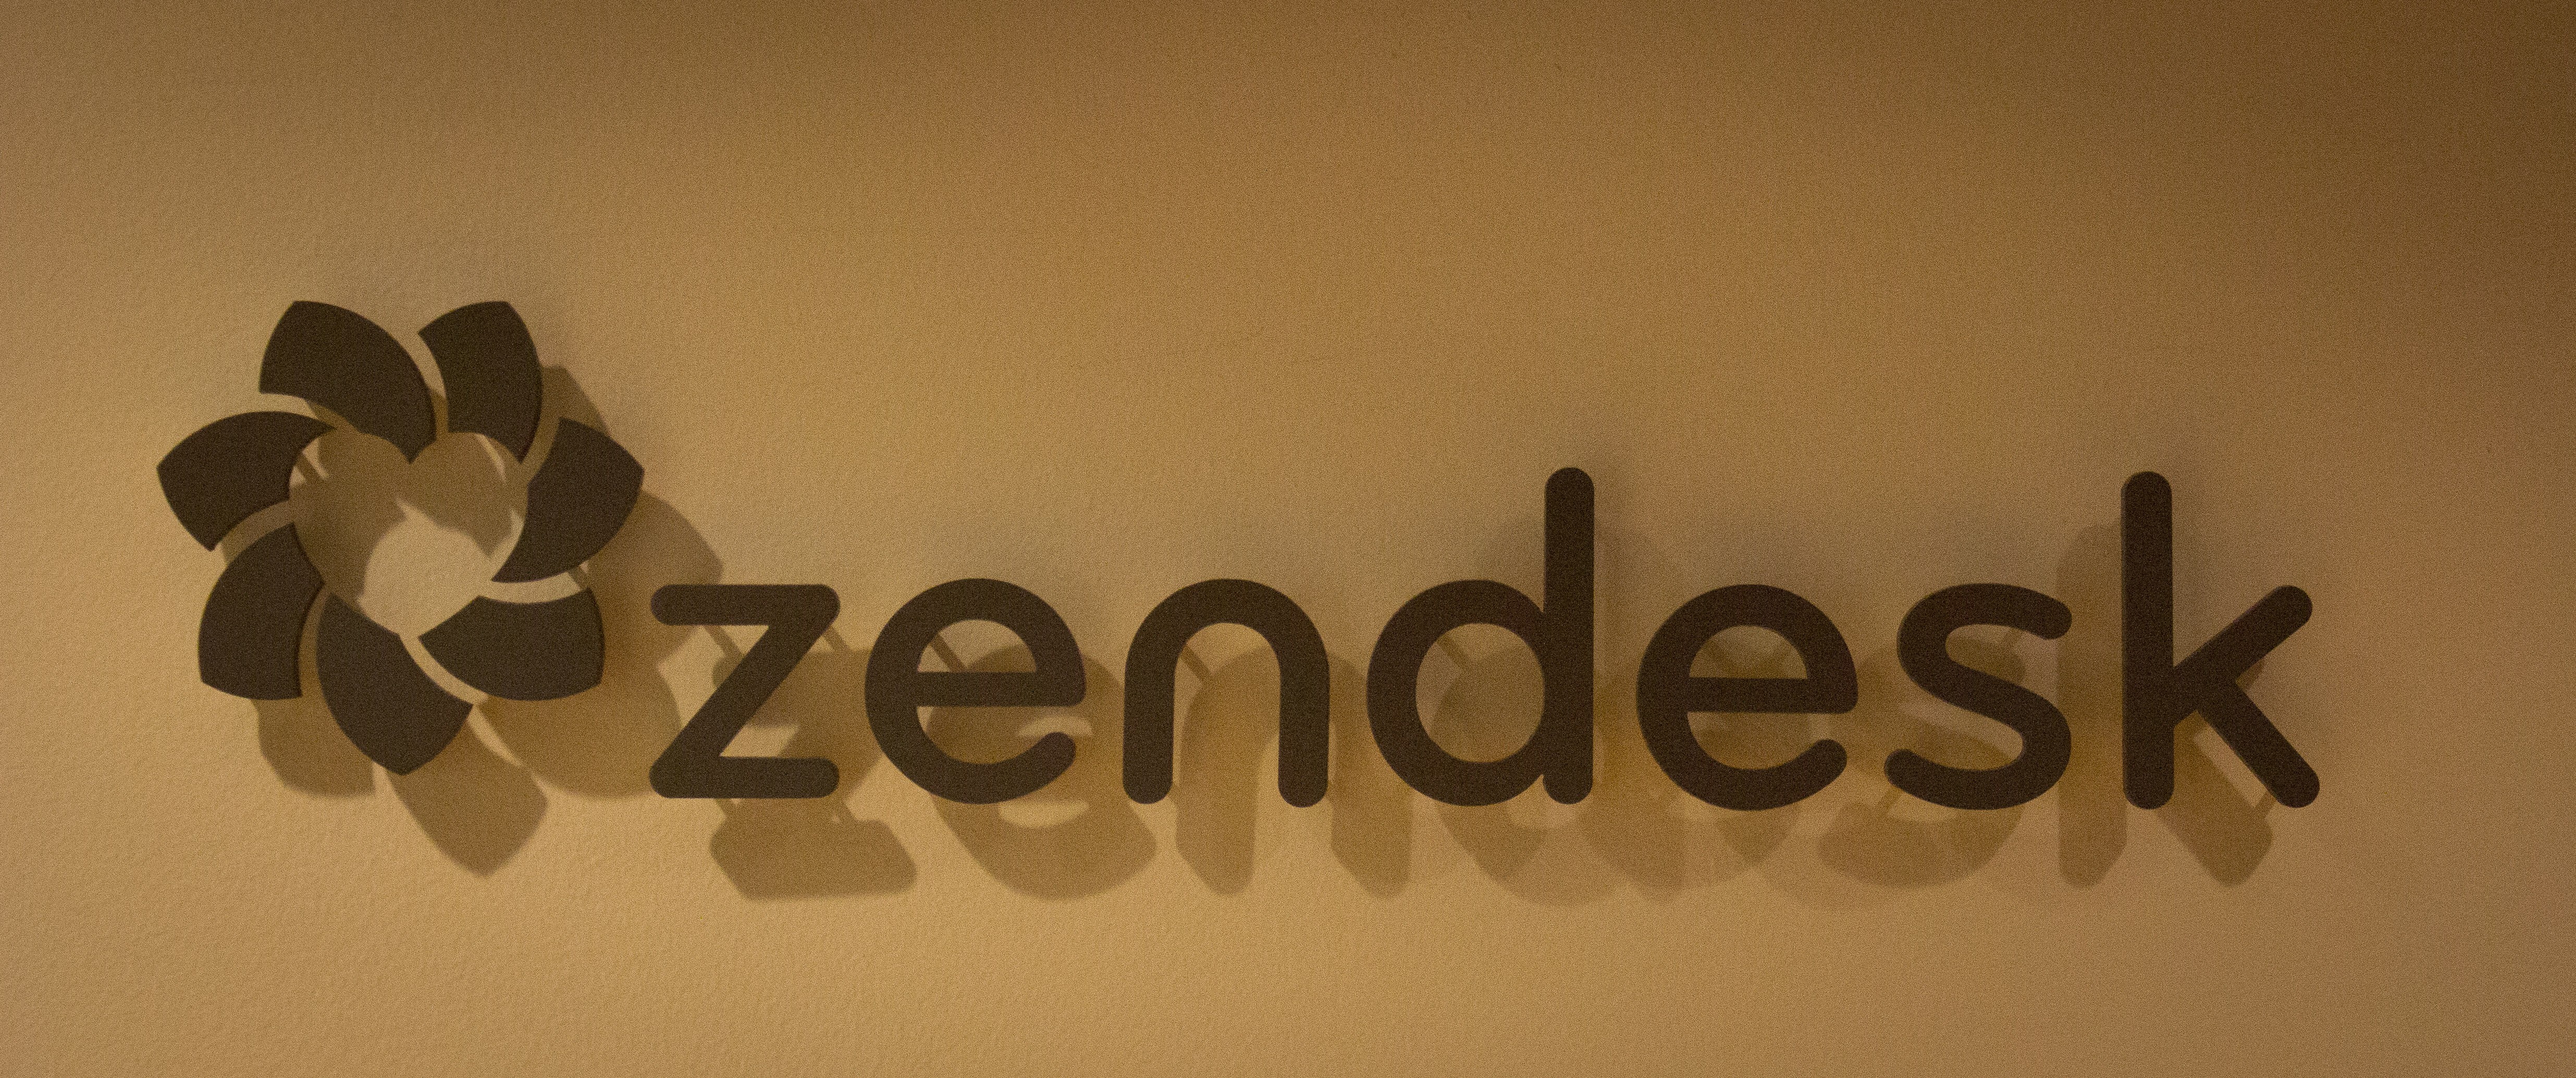 Tendenci Open Source CMS Visits ZenDesk HQ San Francisco